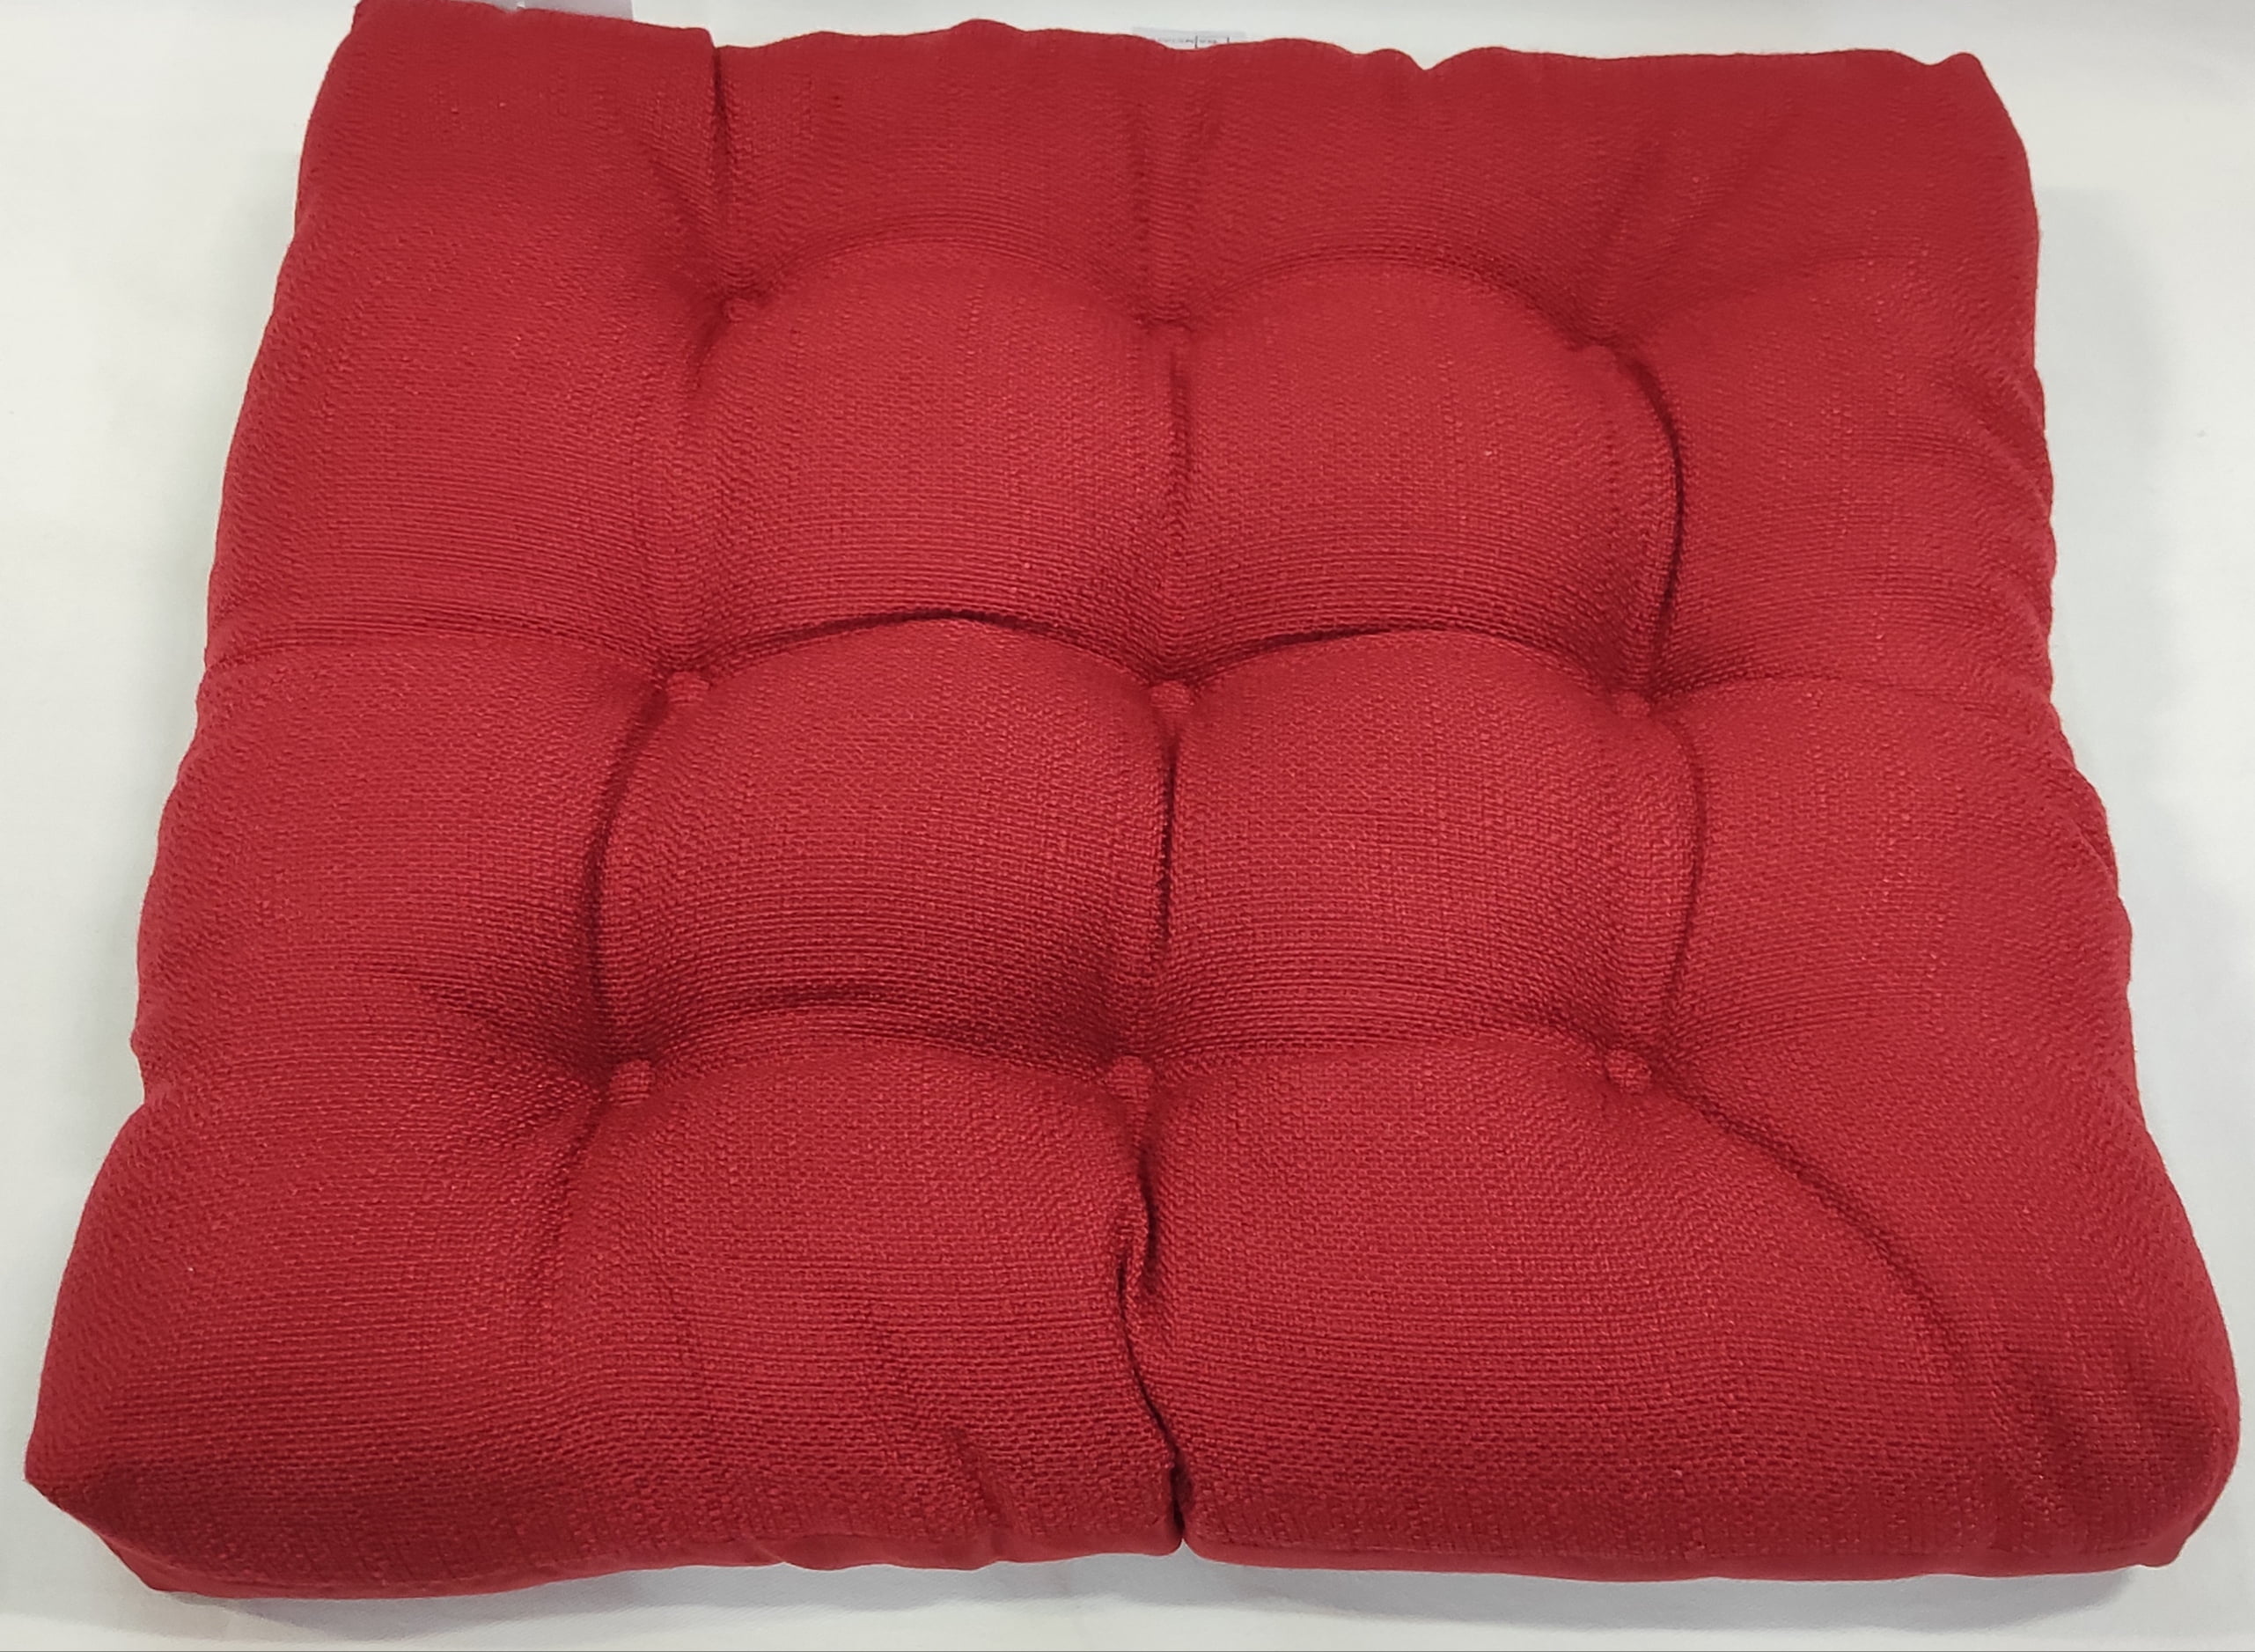 Mainstays Textured Chair Cushion, Red Sedona, 1-Piece